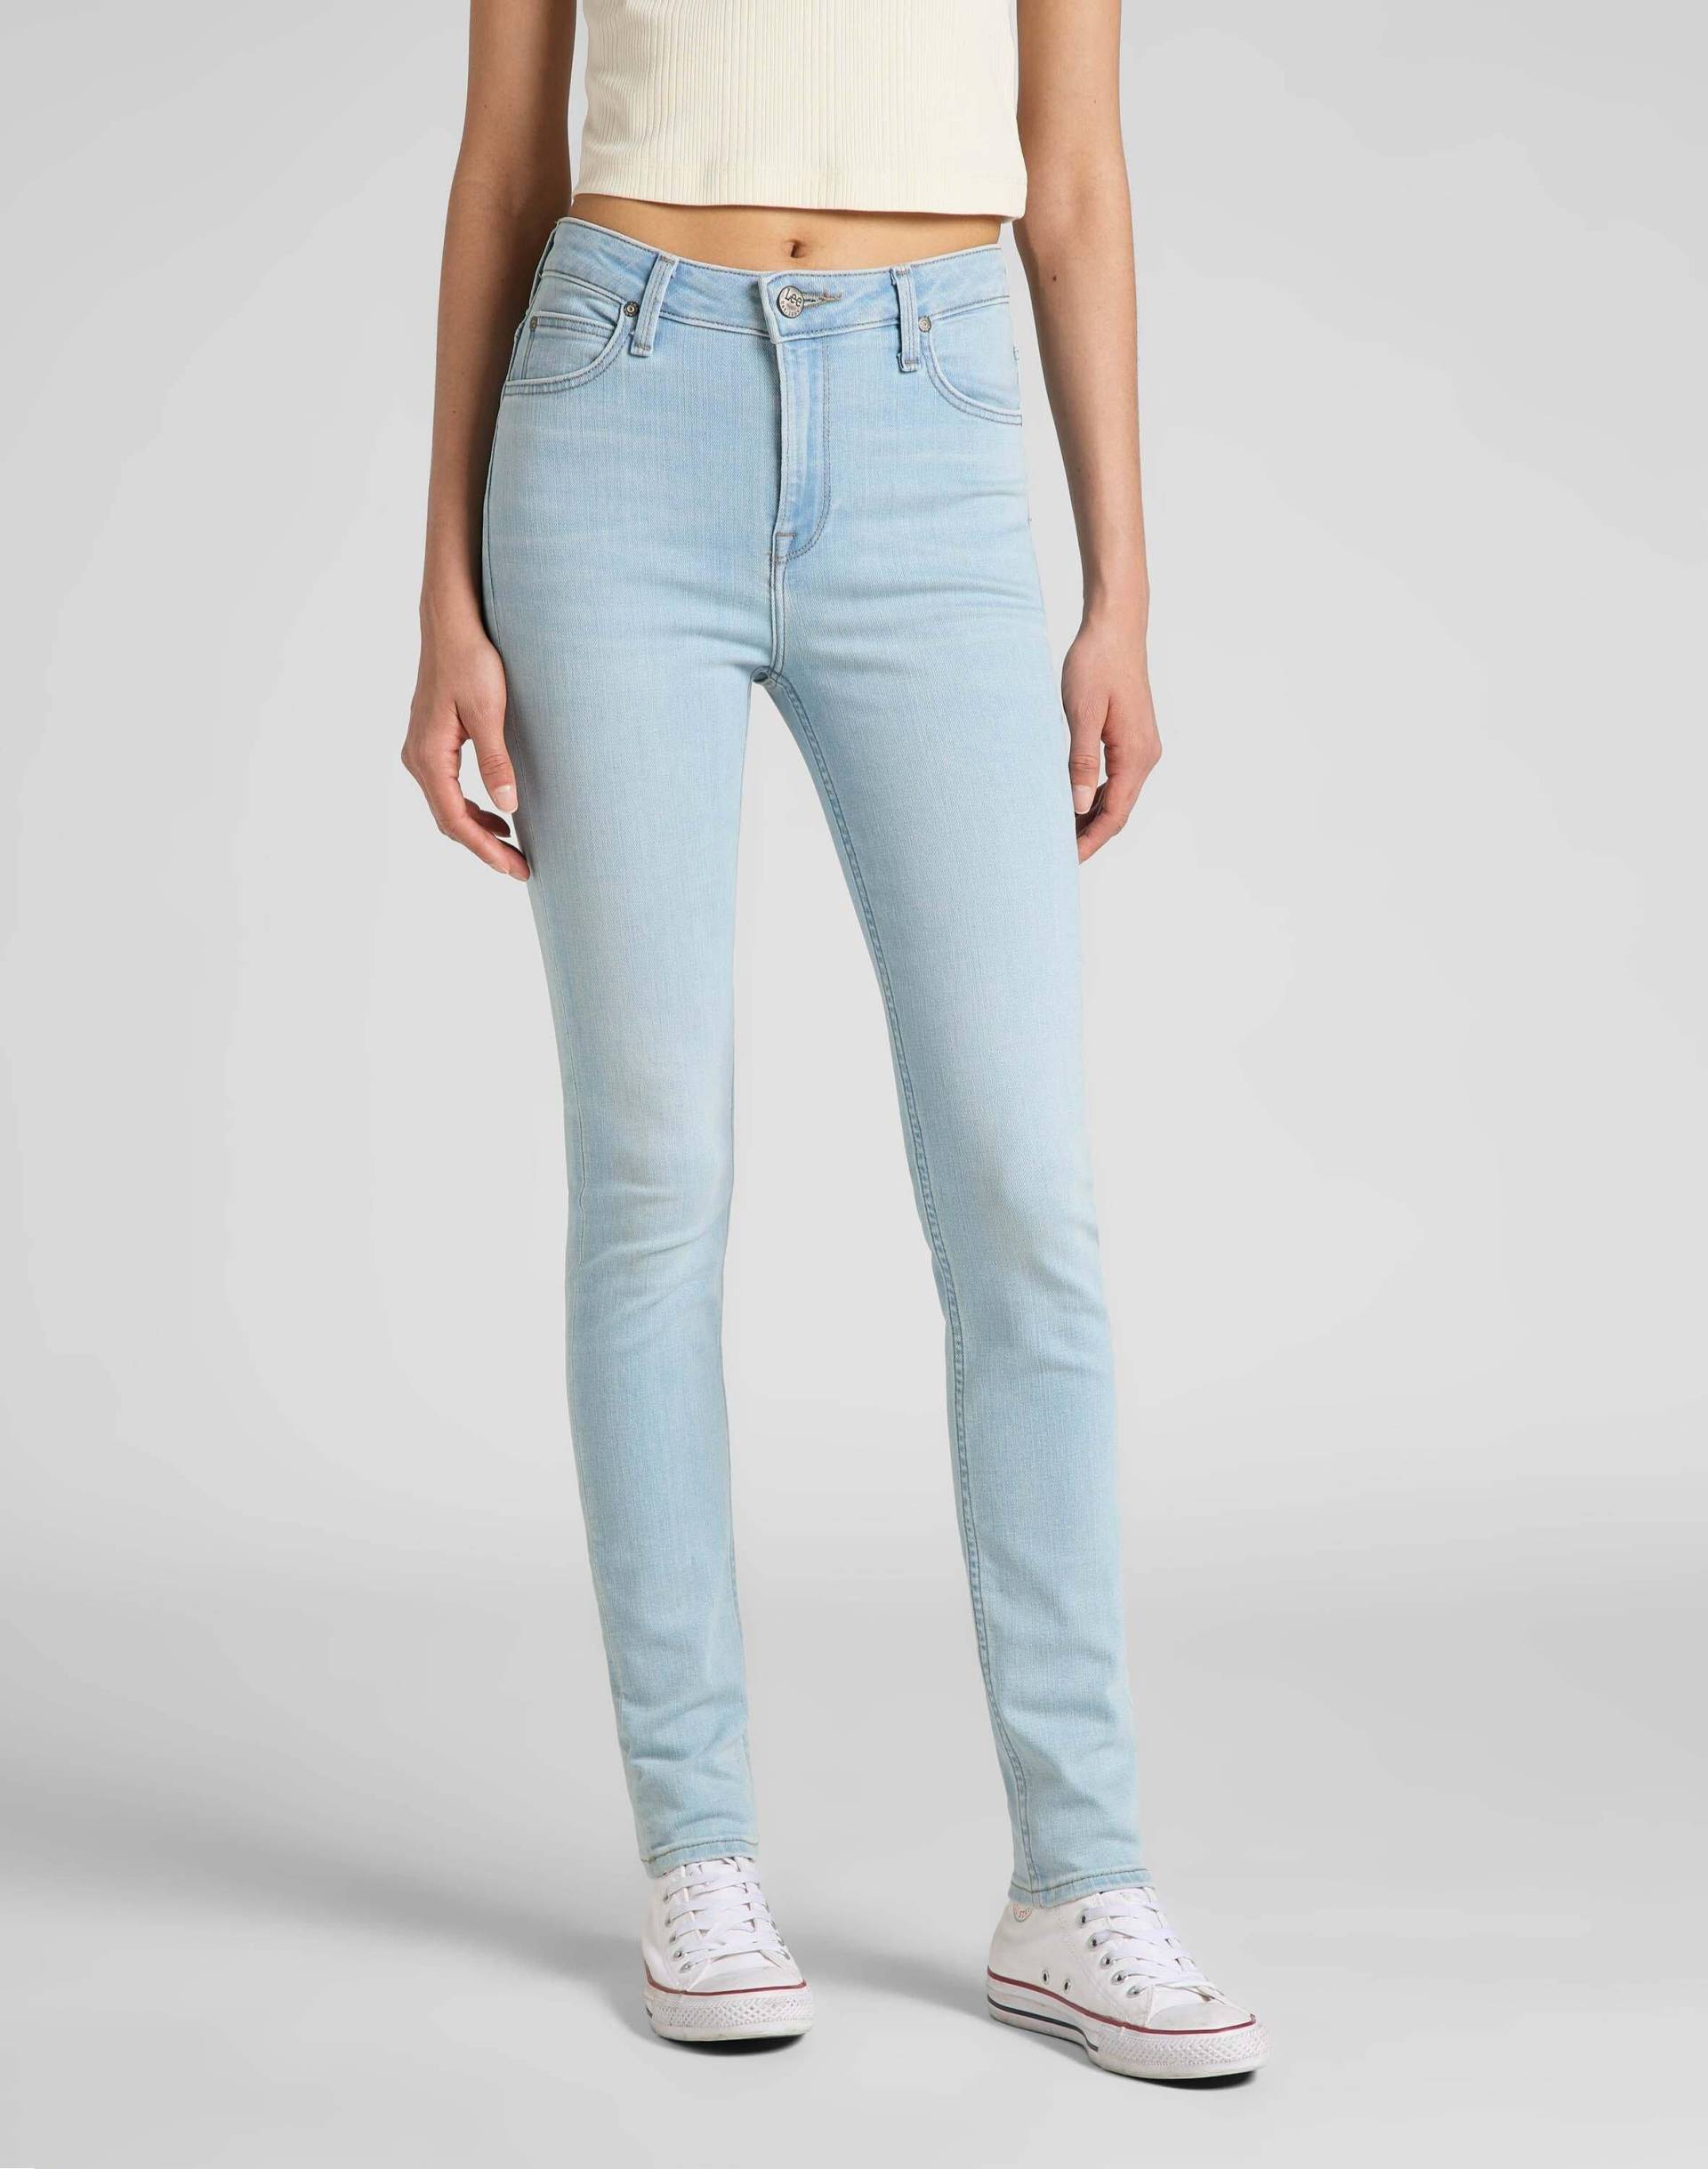 Jeans Skinny Fit Scarlett High Damen Hellblau L31/W24 von Lee